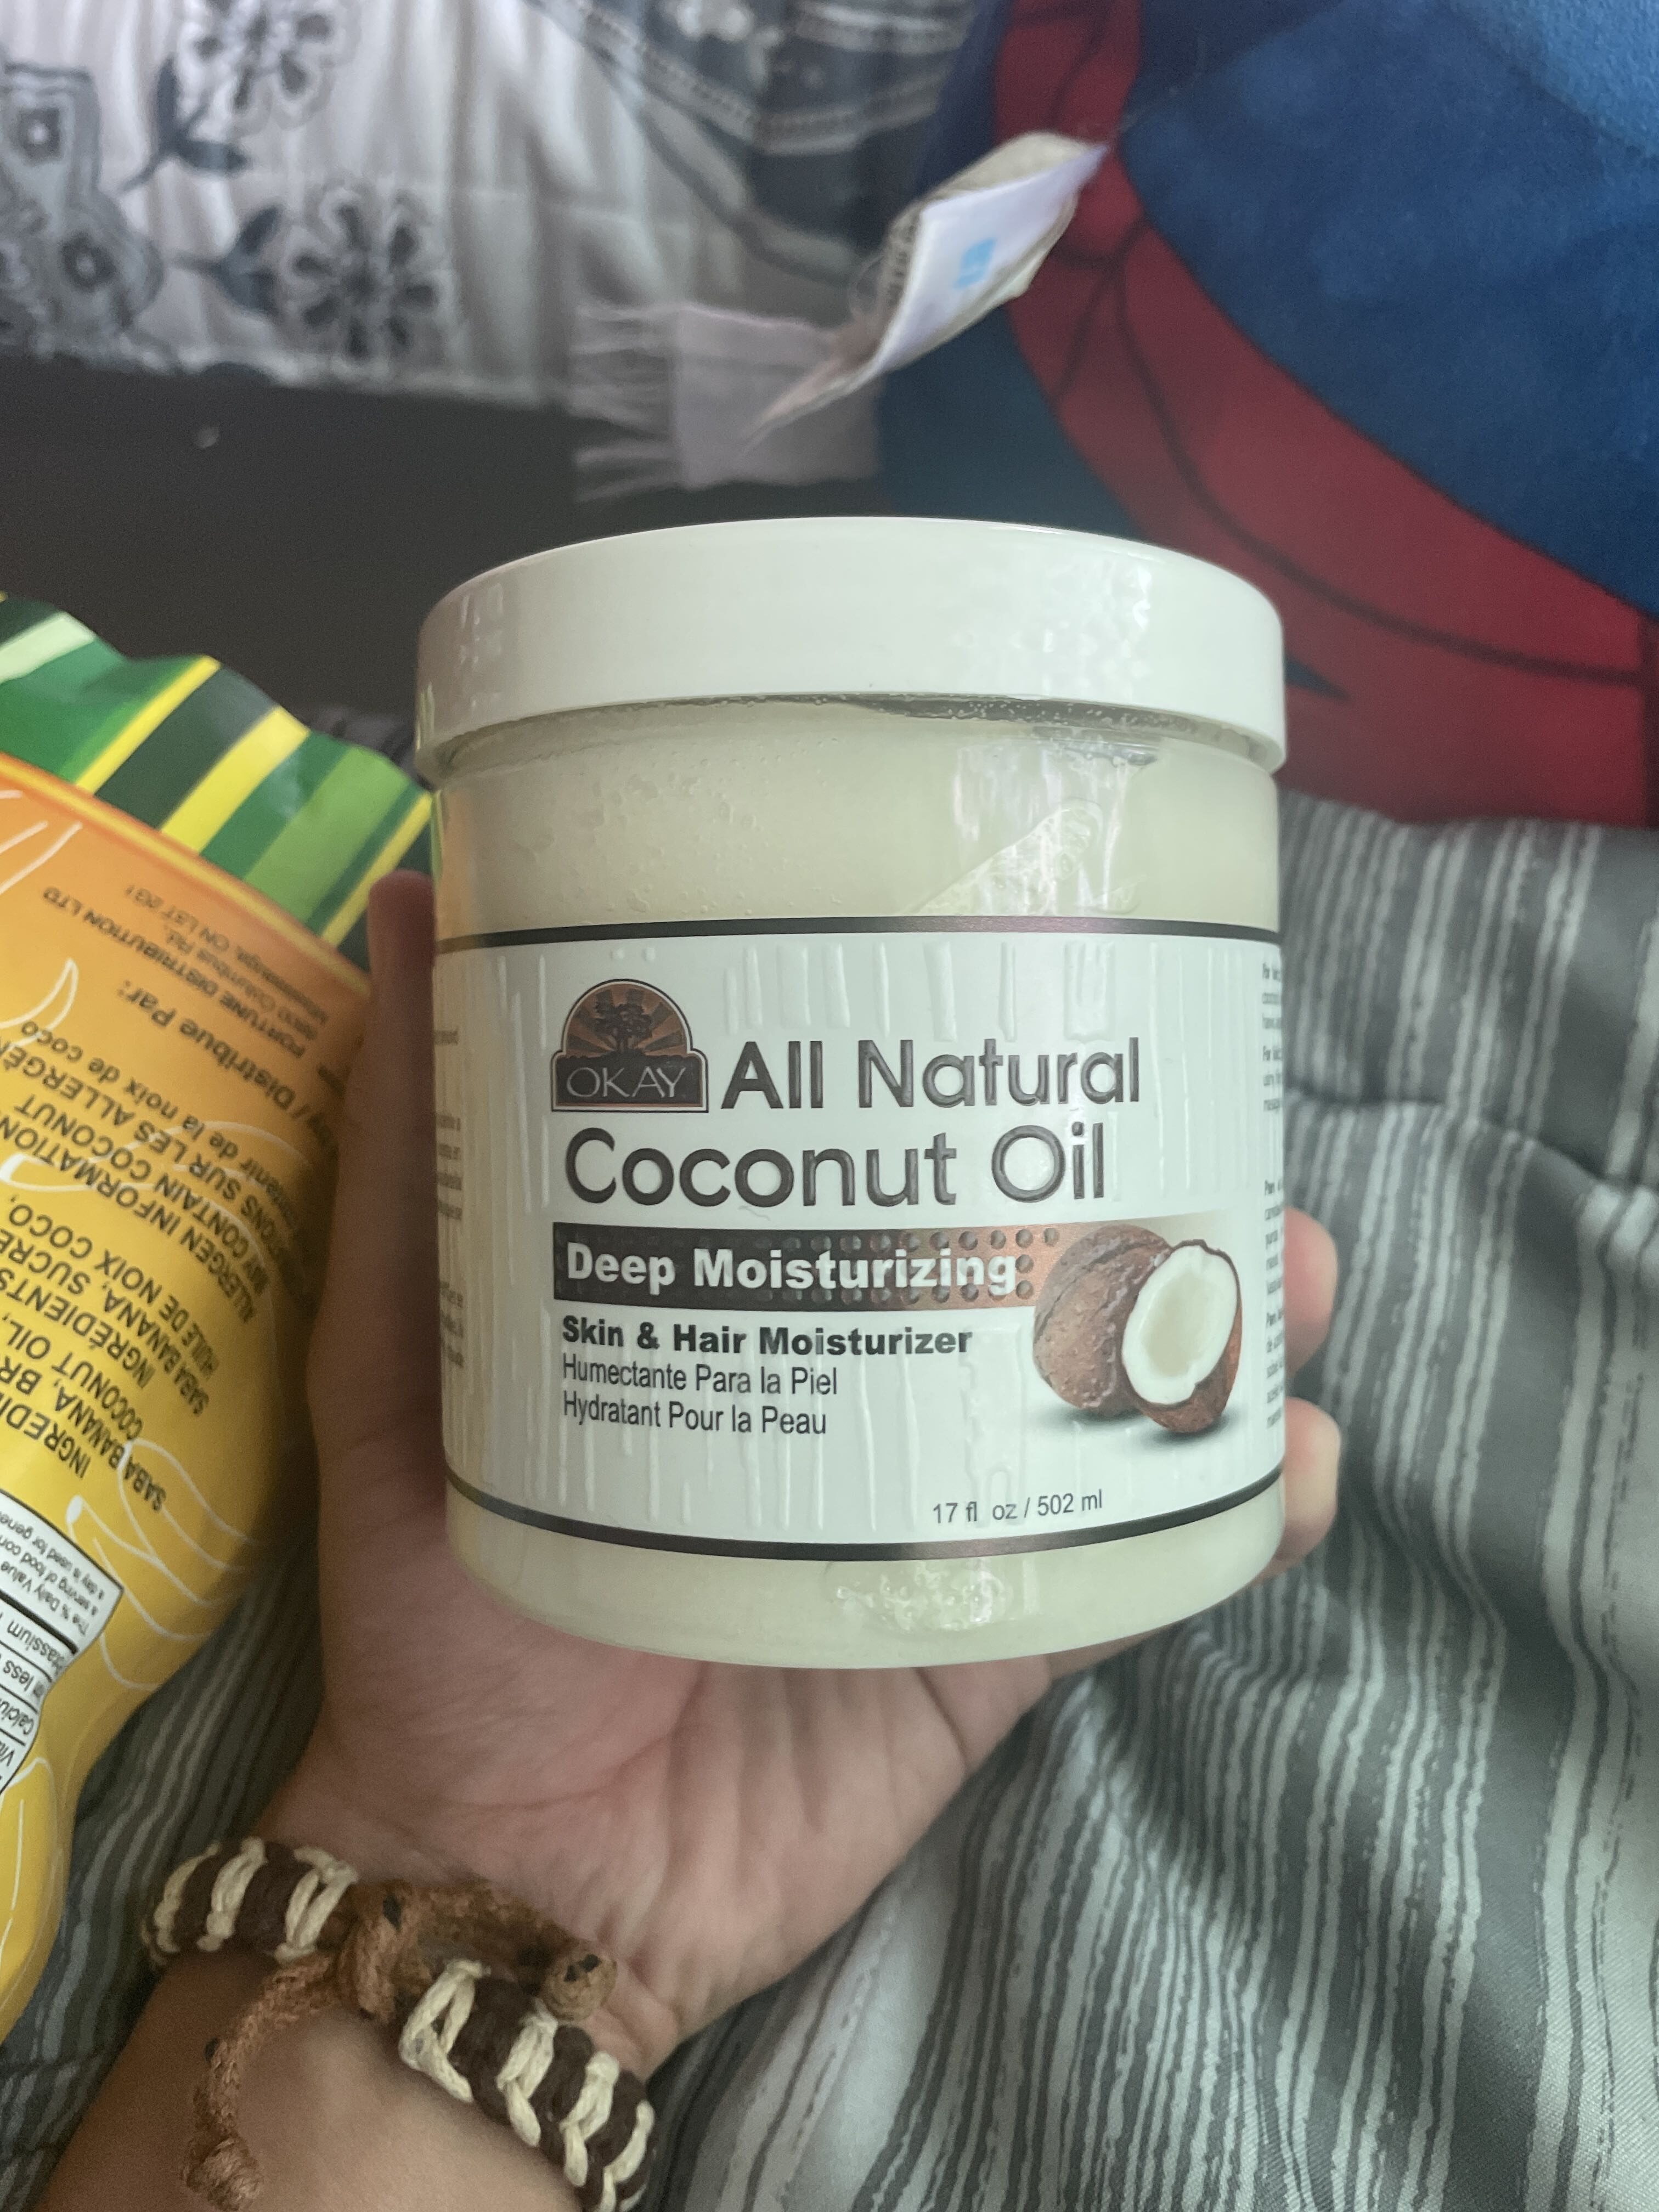 All natural coconut oil - Produto - en